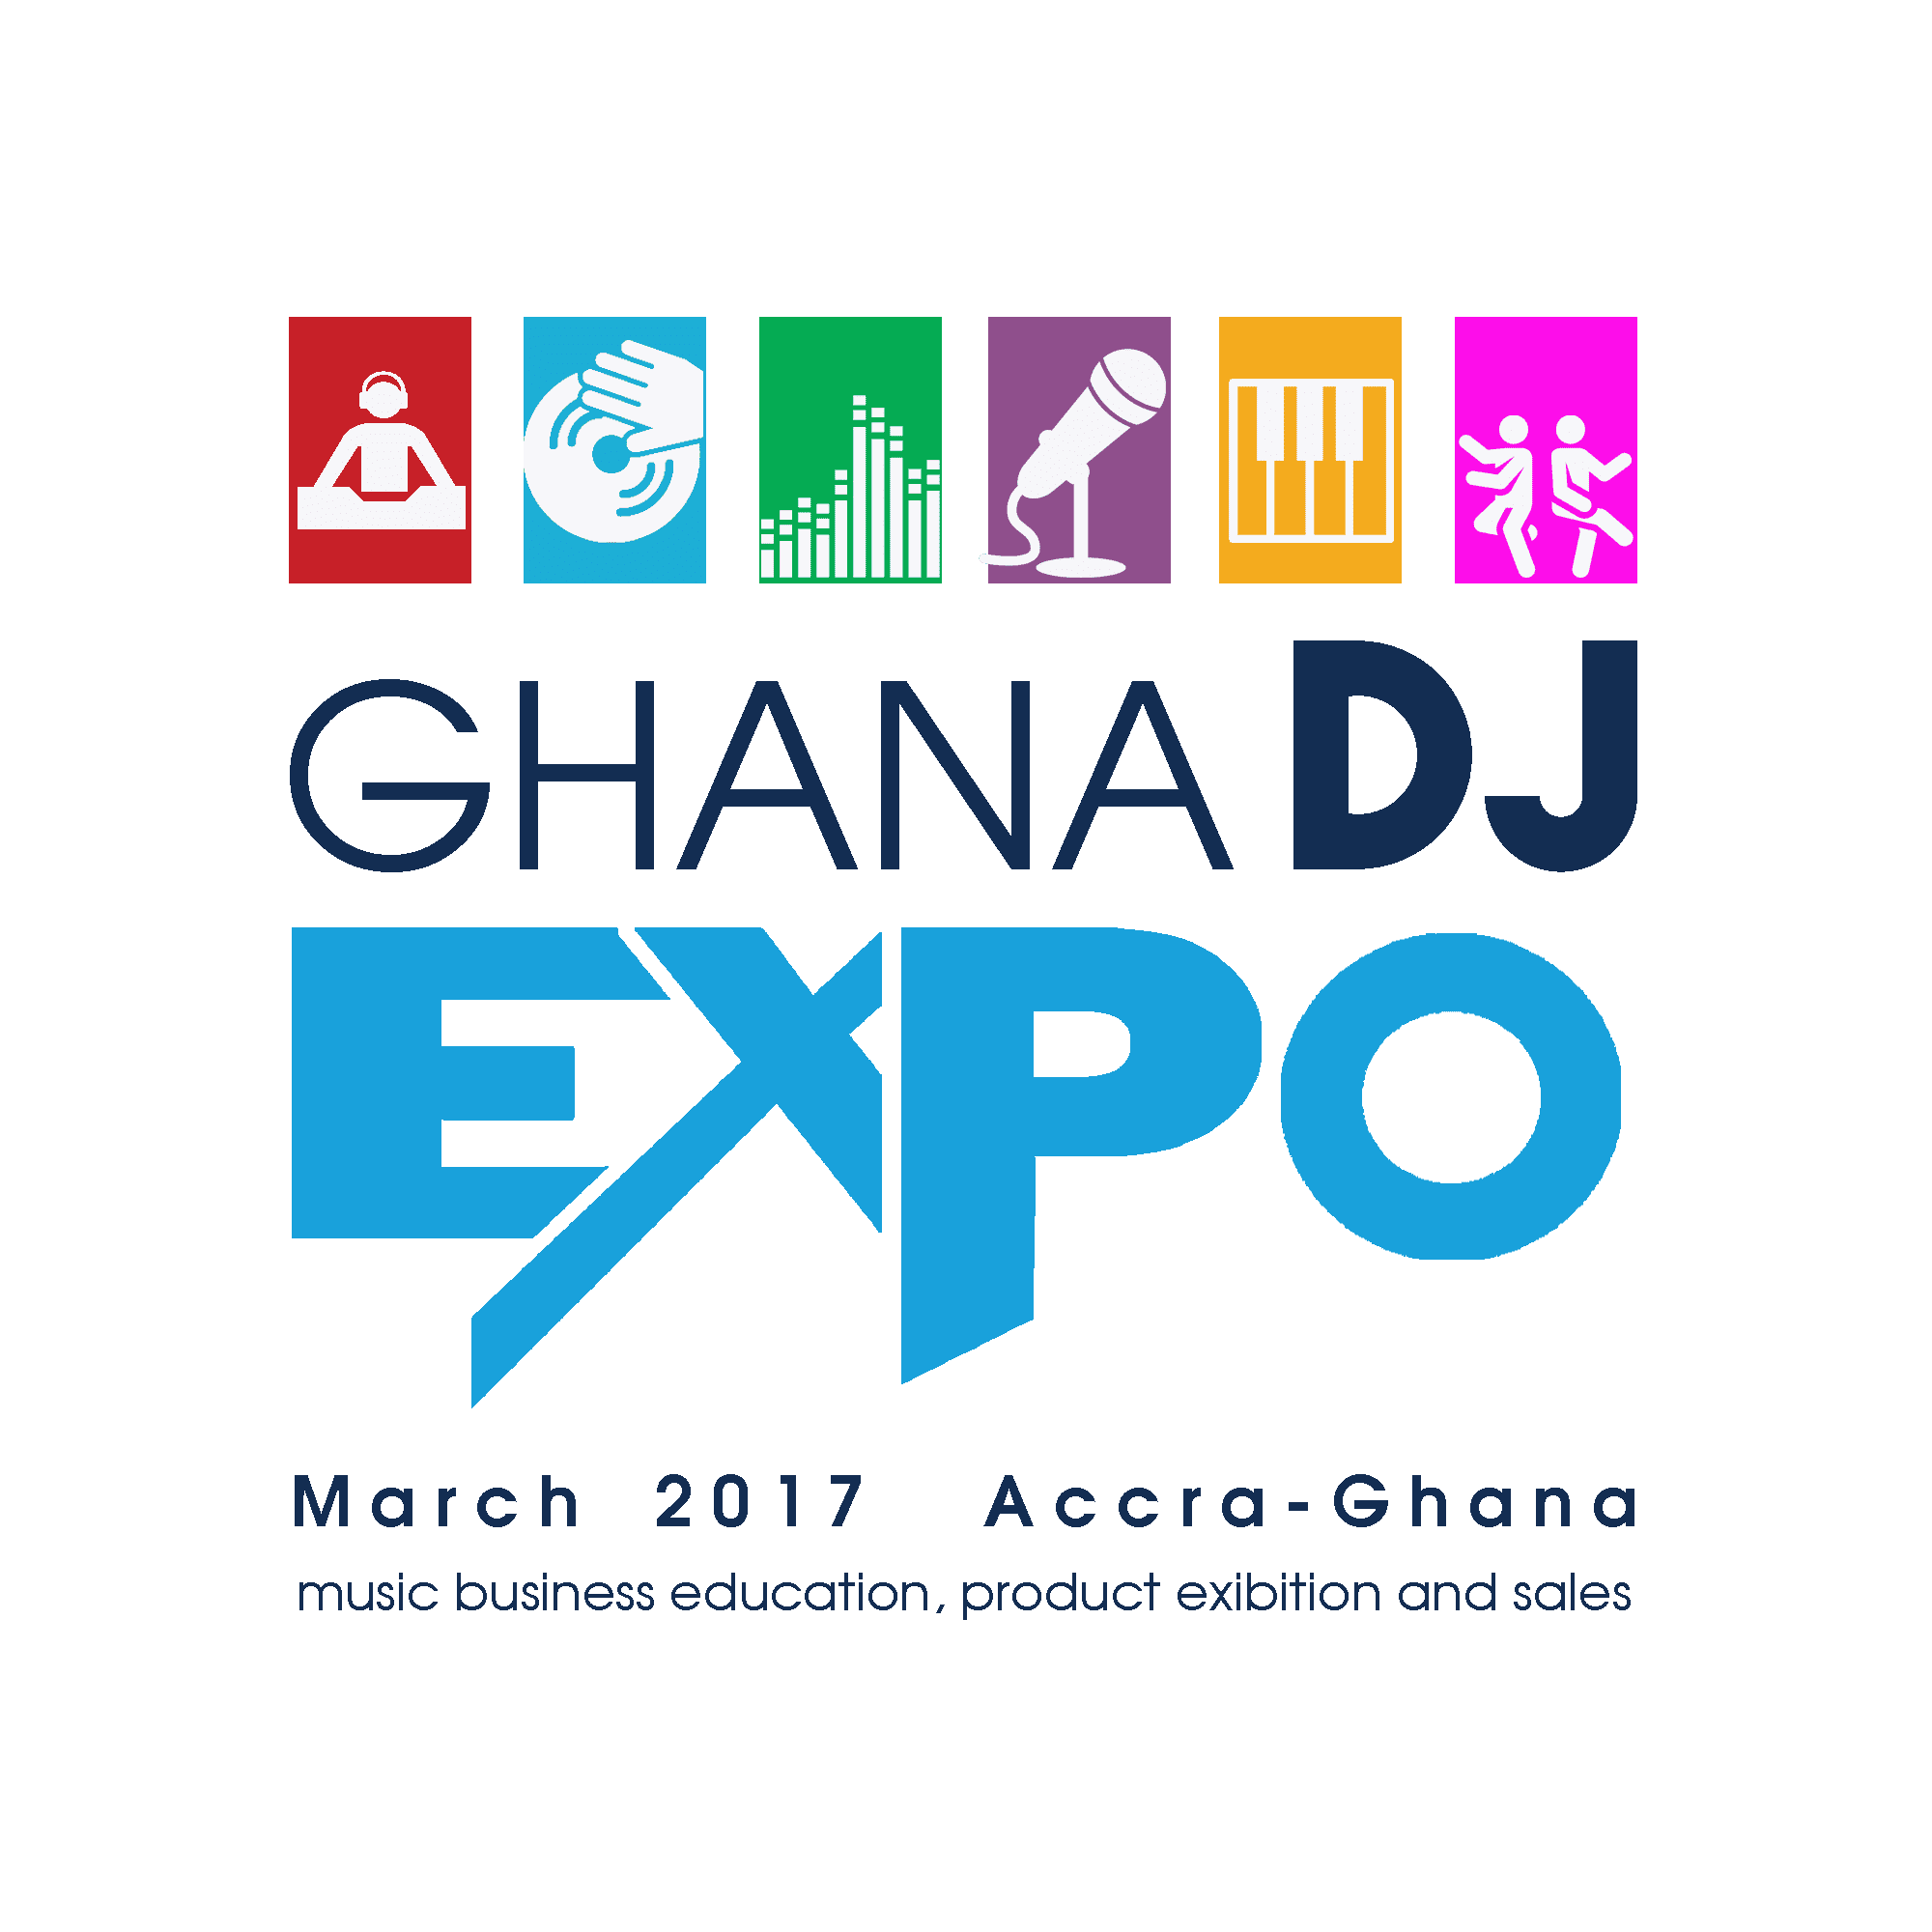 Ghana DJ Expo Slated For March 2017